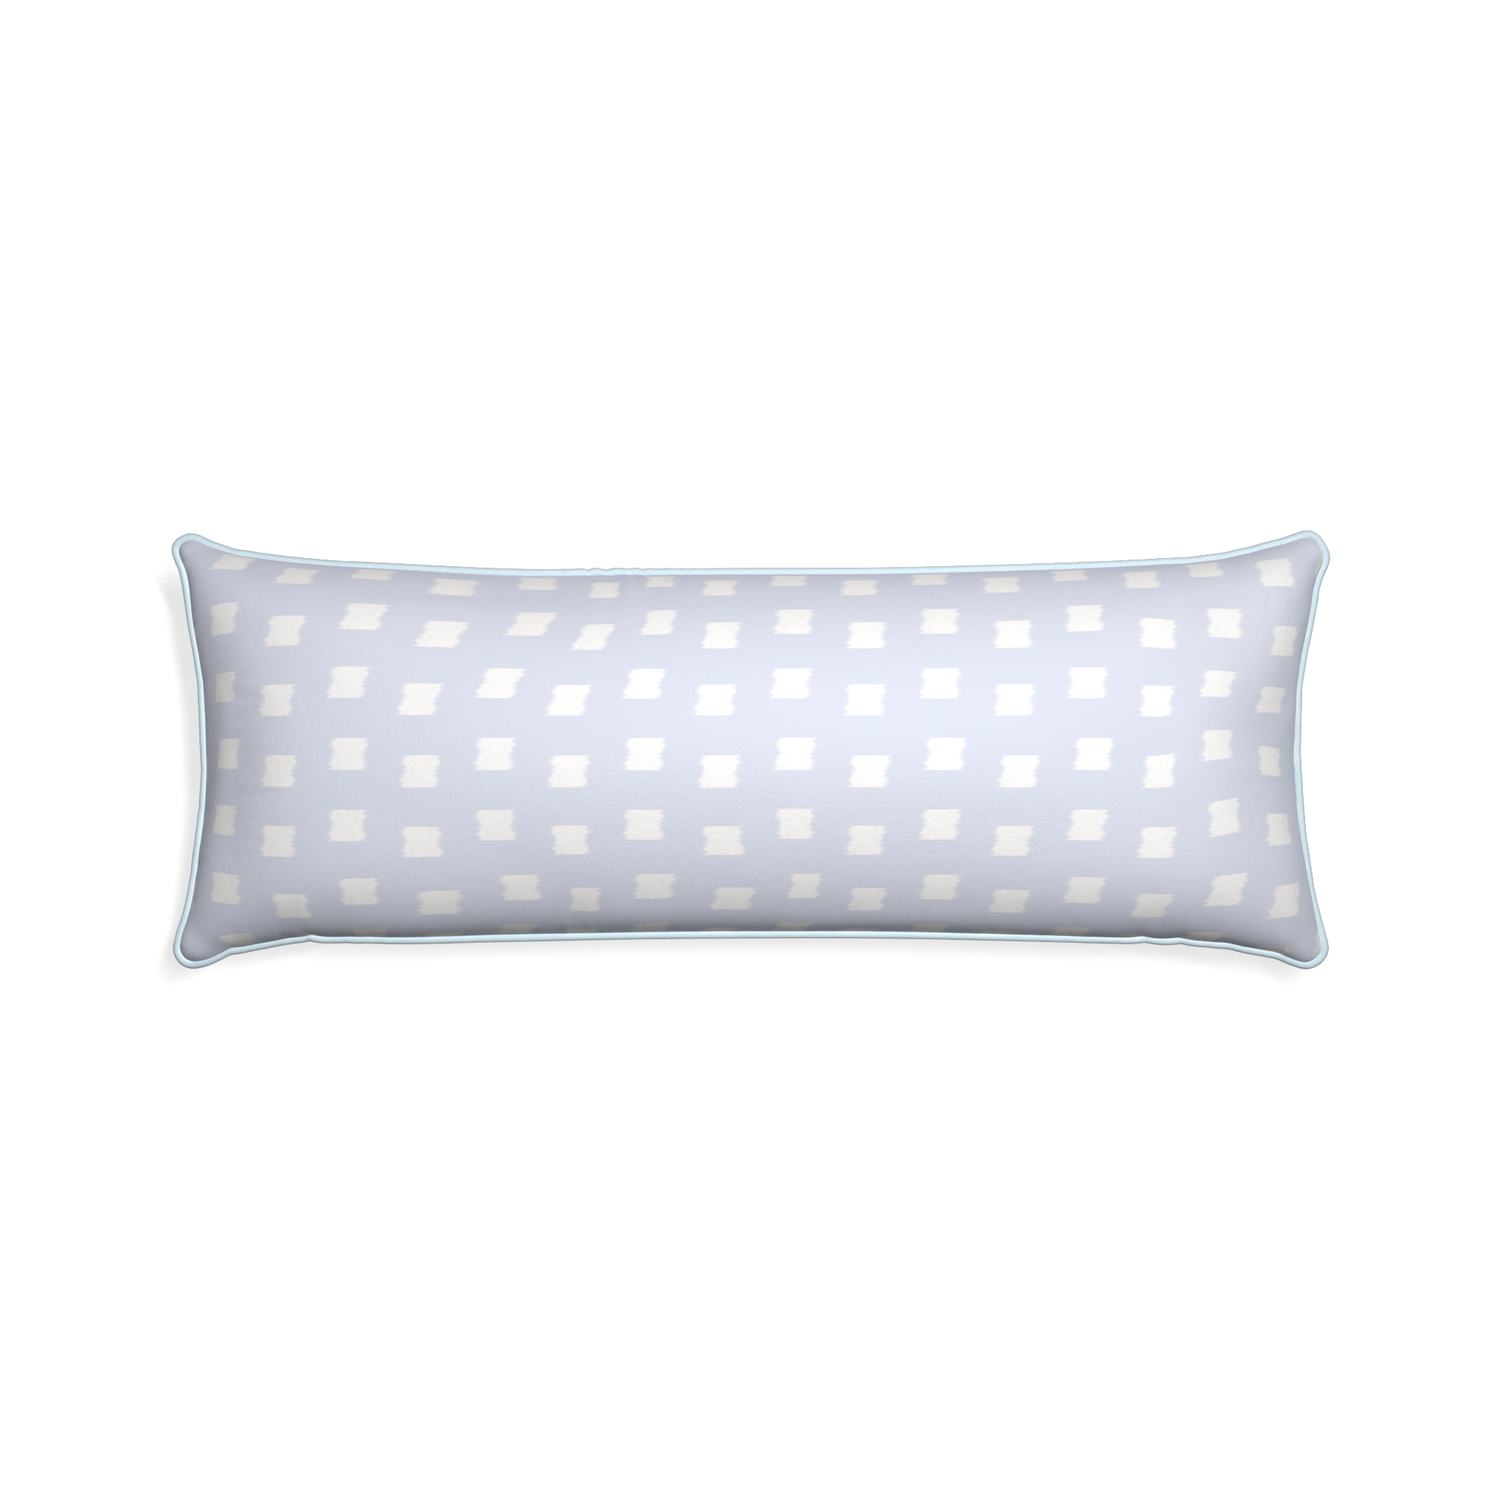 Xl-lumbar denton custom pillow with powder piping on white background